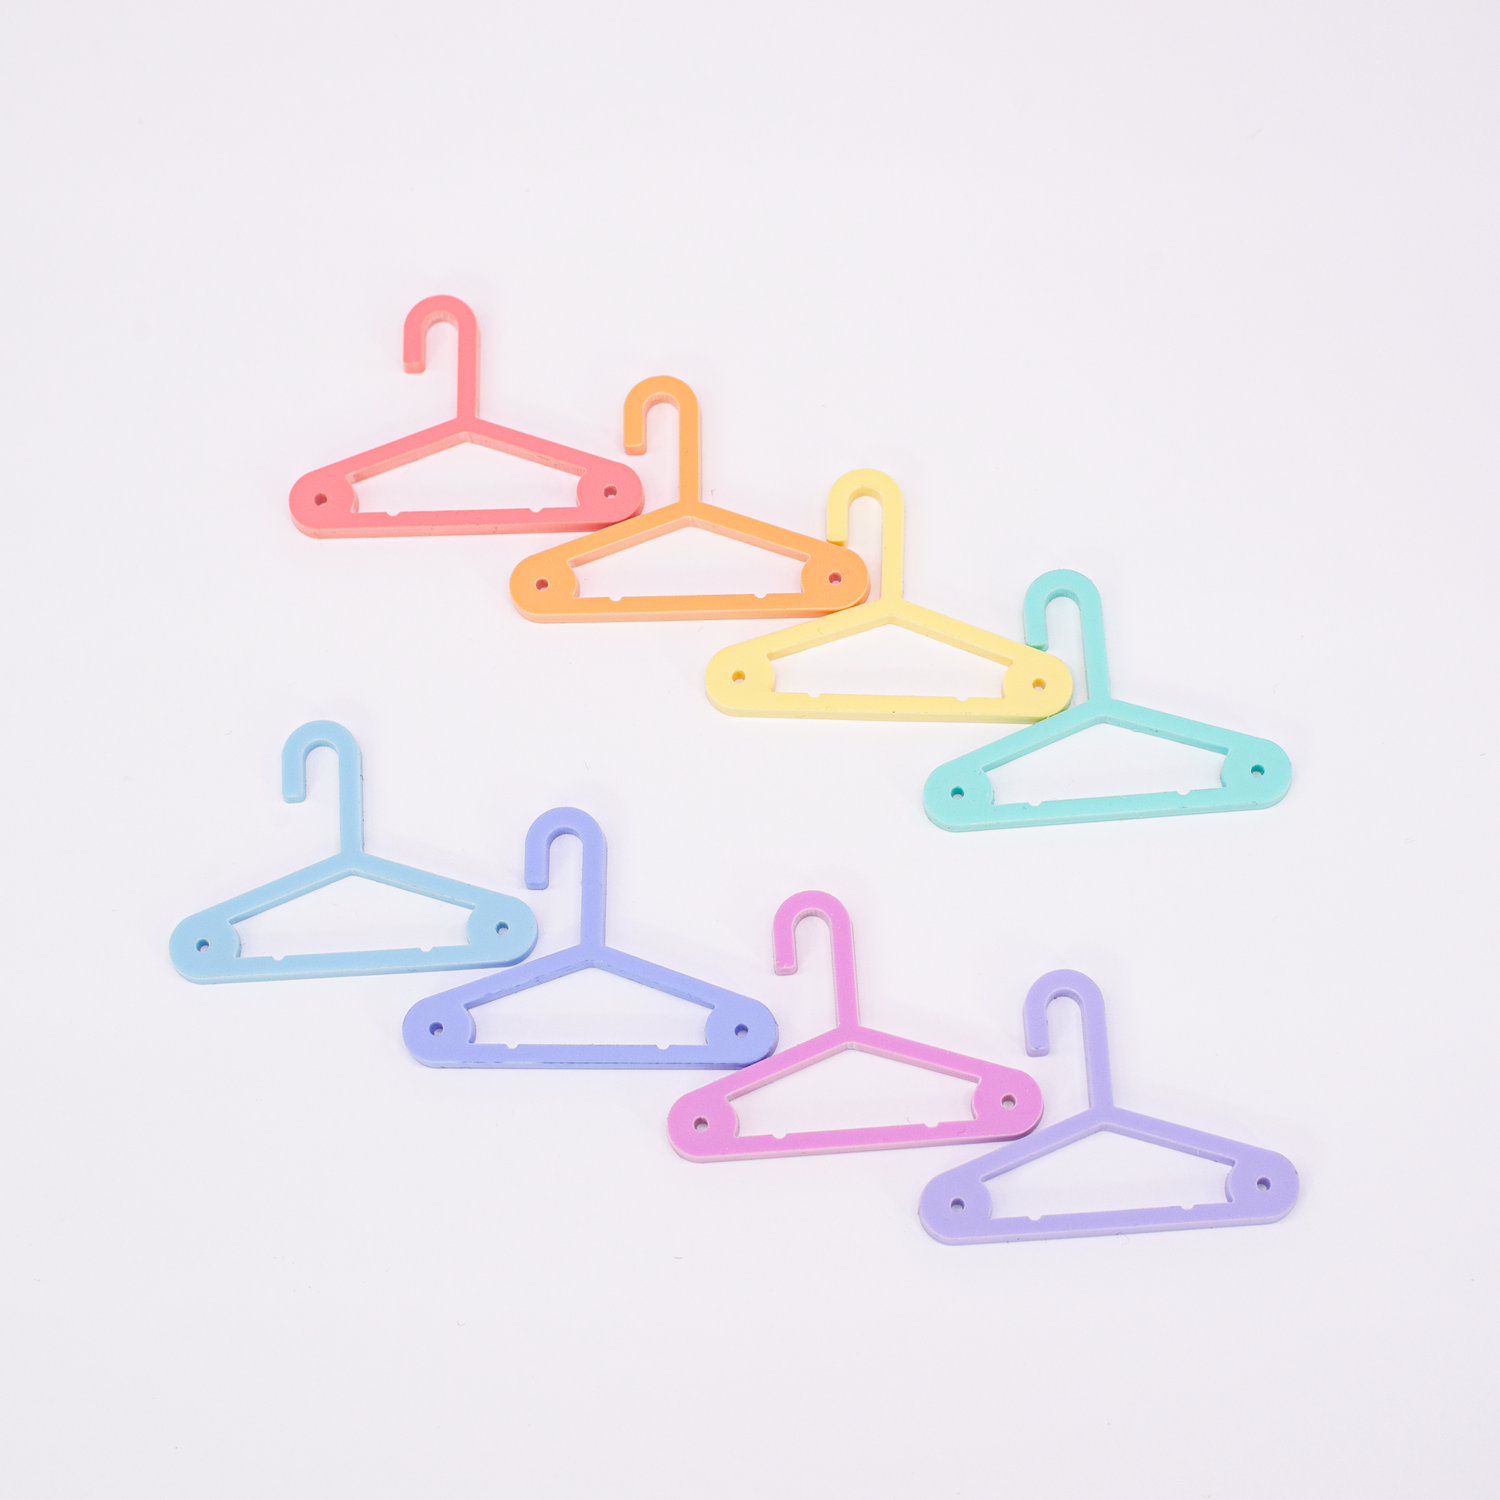 Pastel Rainbow Earring Storage Wardrobe